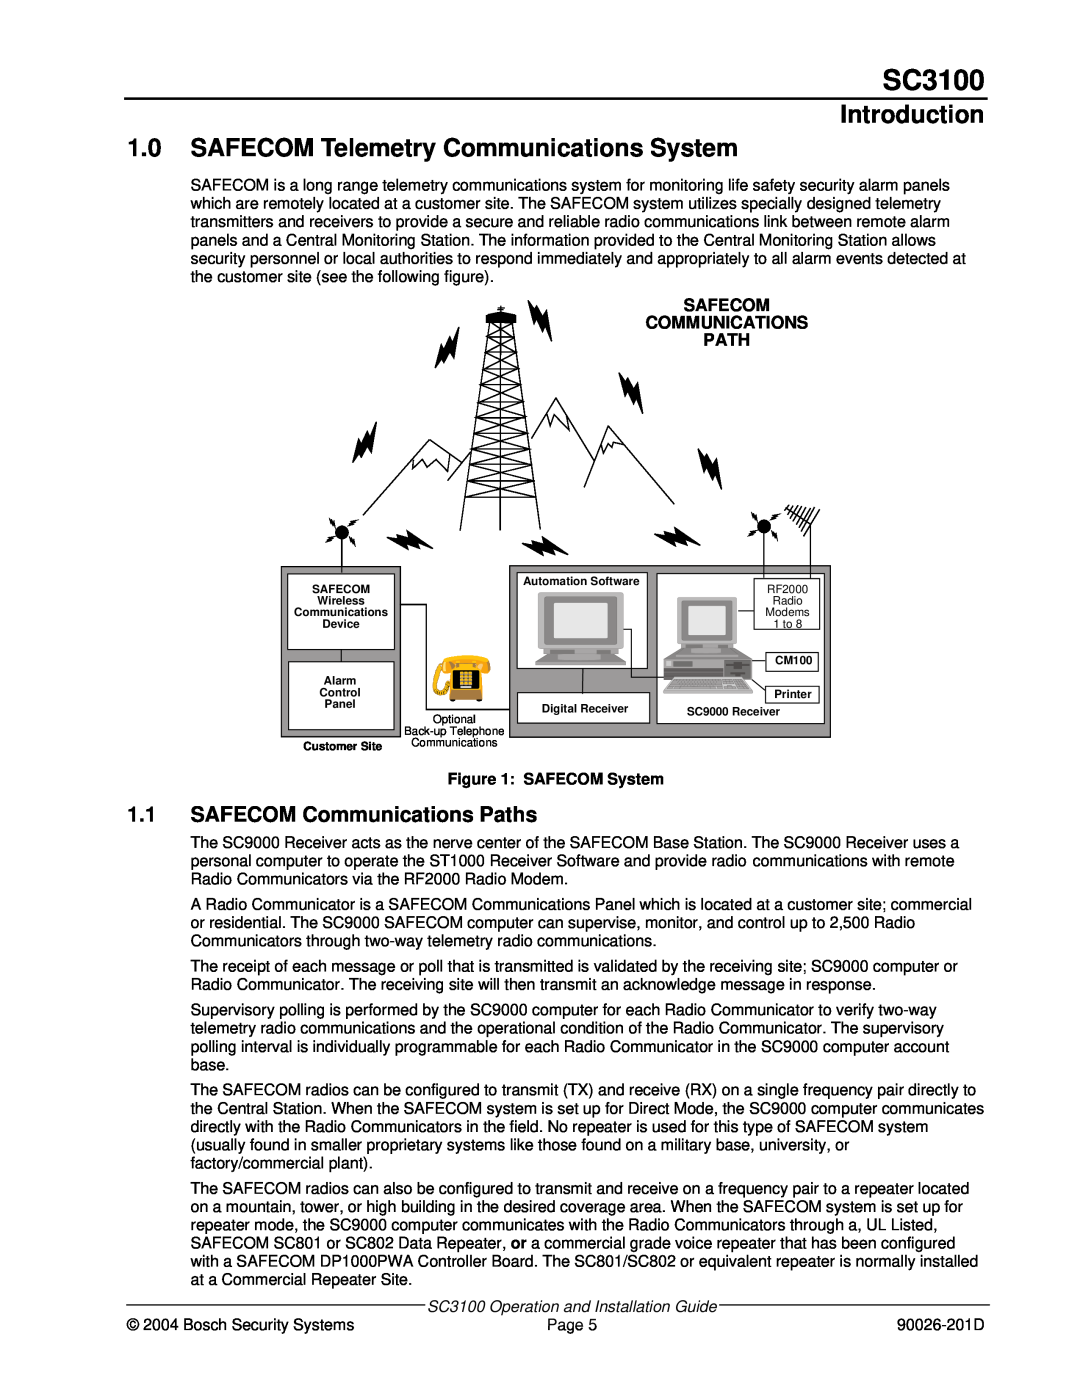 Bosch Appliances SC3100 manual Introduction, 1.0SAFECOM Telemetry Communications System, 1.1SAFECOM Communications Paths 